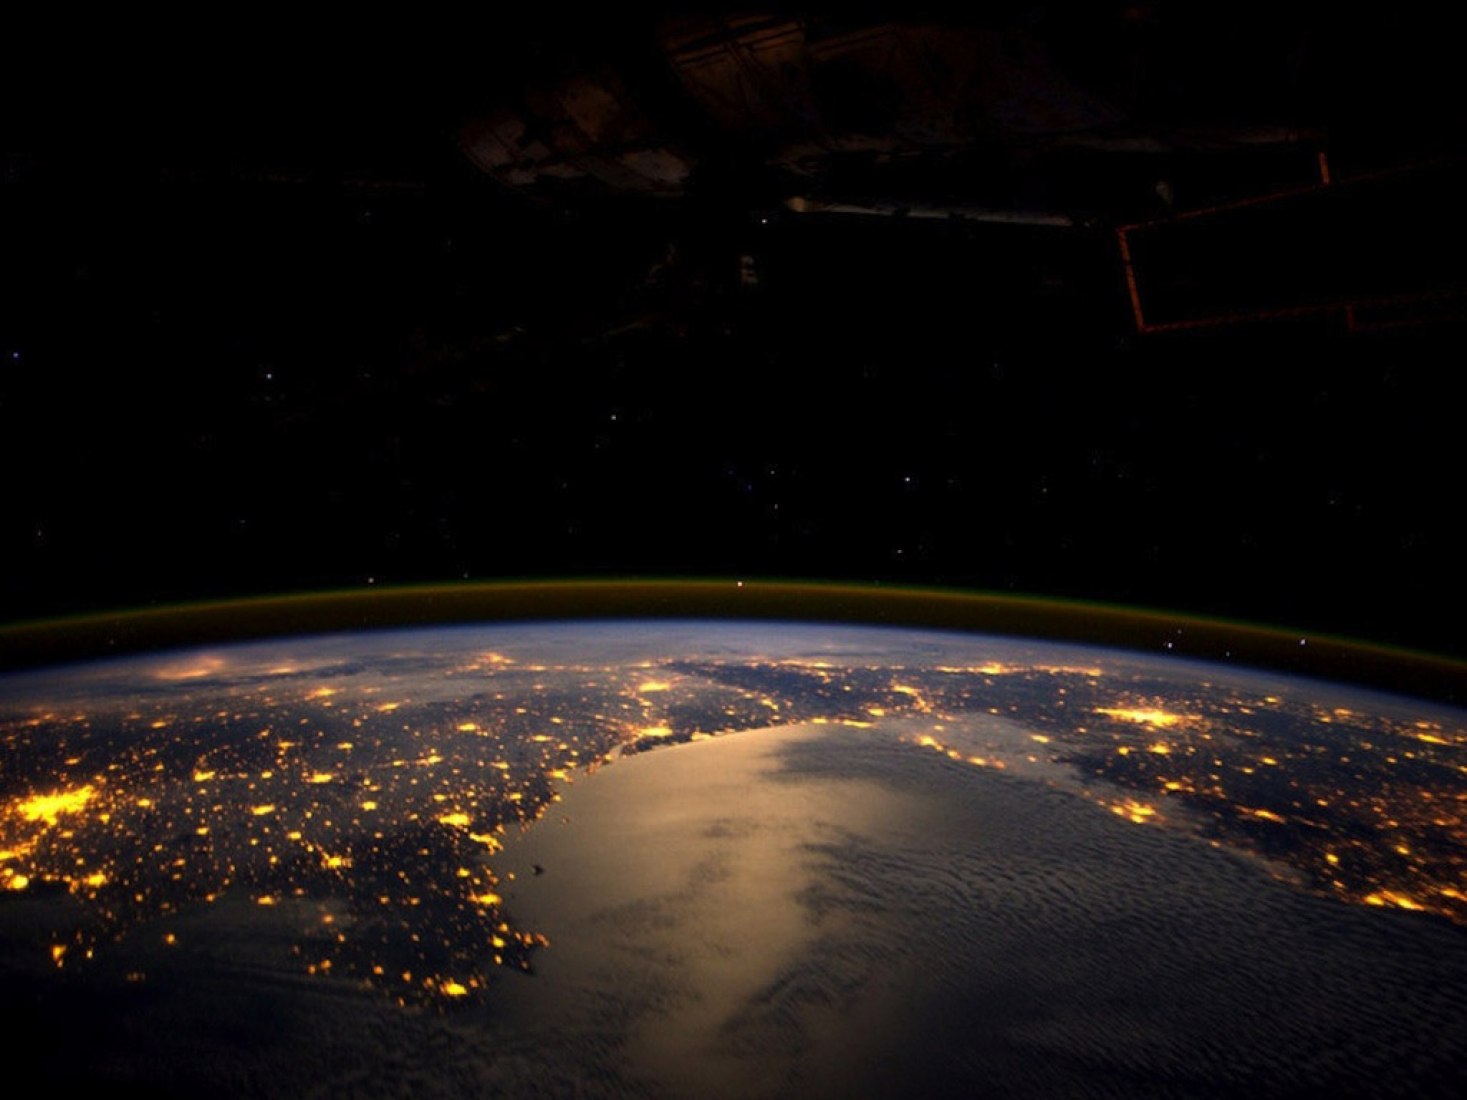 Europa de noche. Fotografía ISS/NASA.